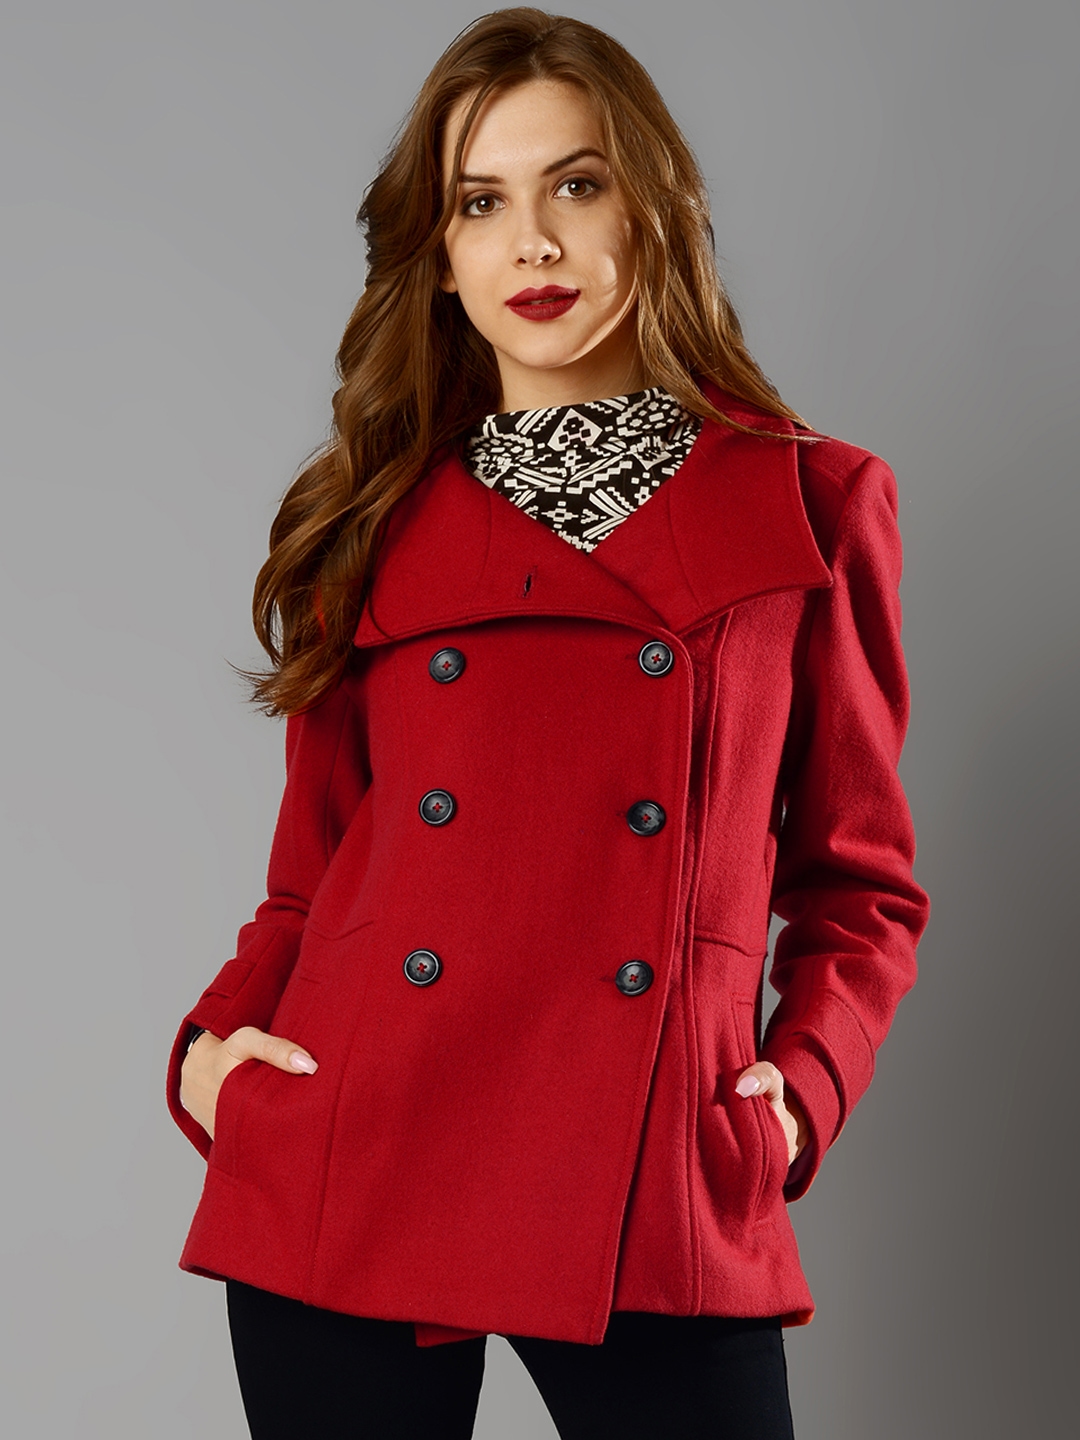 Red Coats - Buy Red Coats online in India